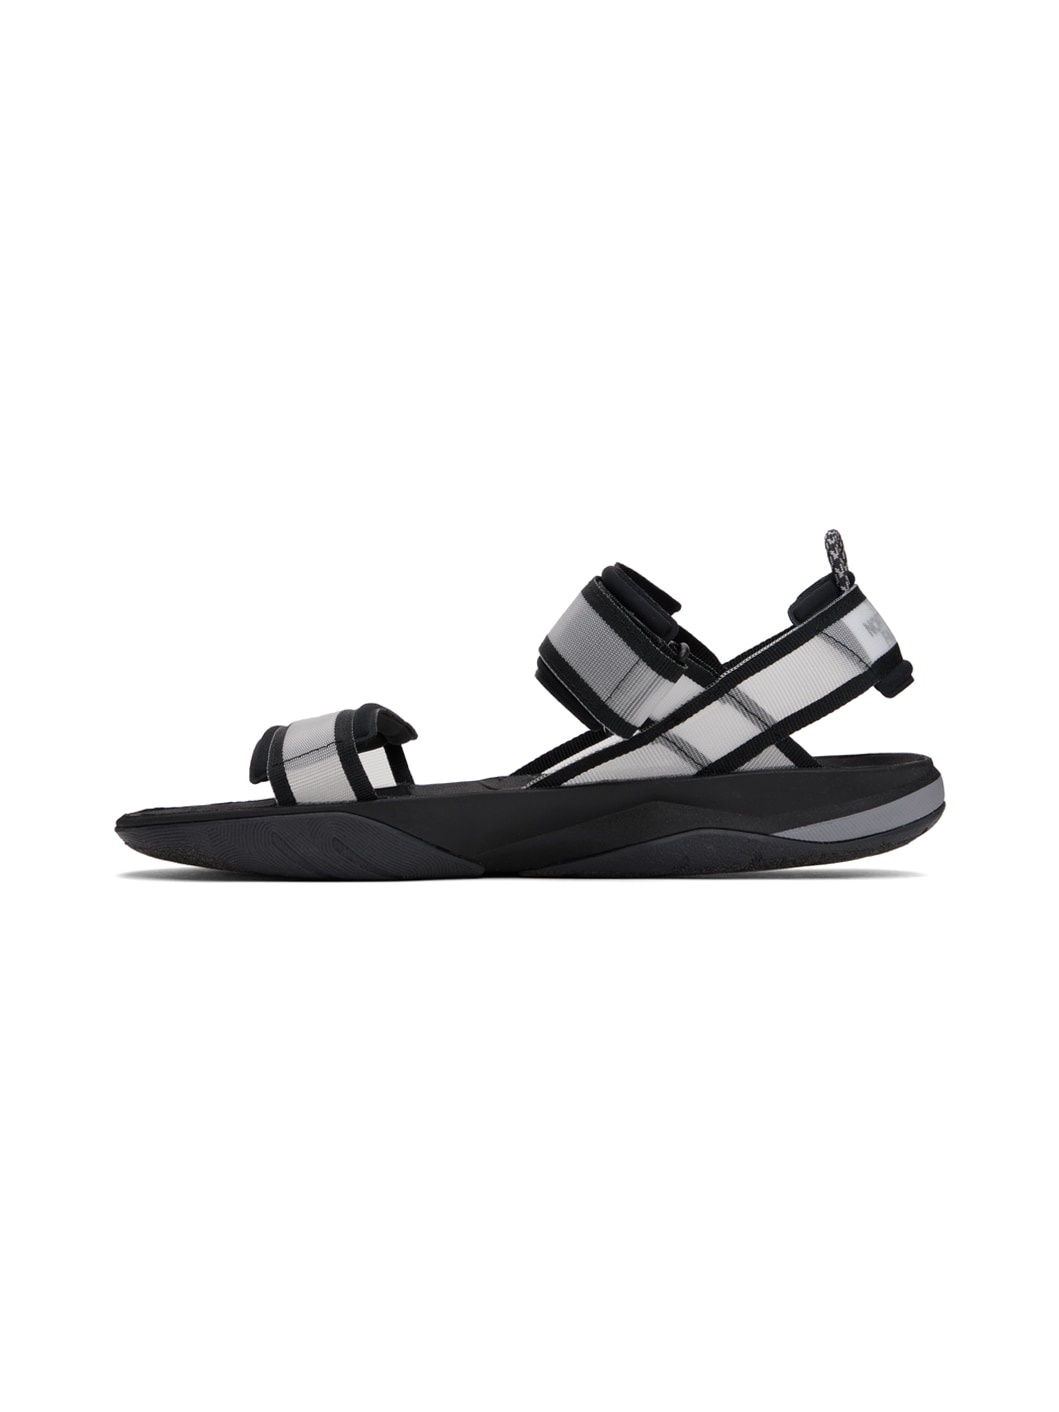 Gray & Black Skeena Sandals - 3